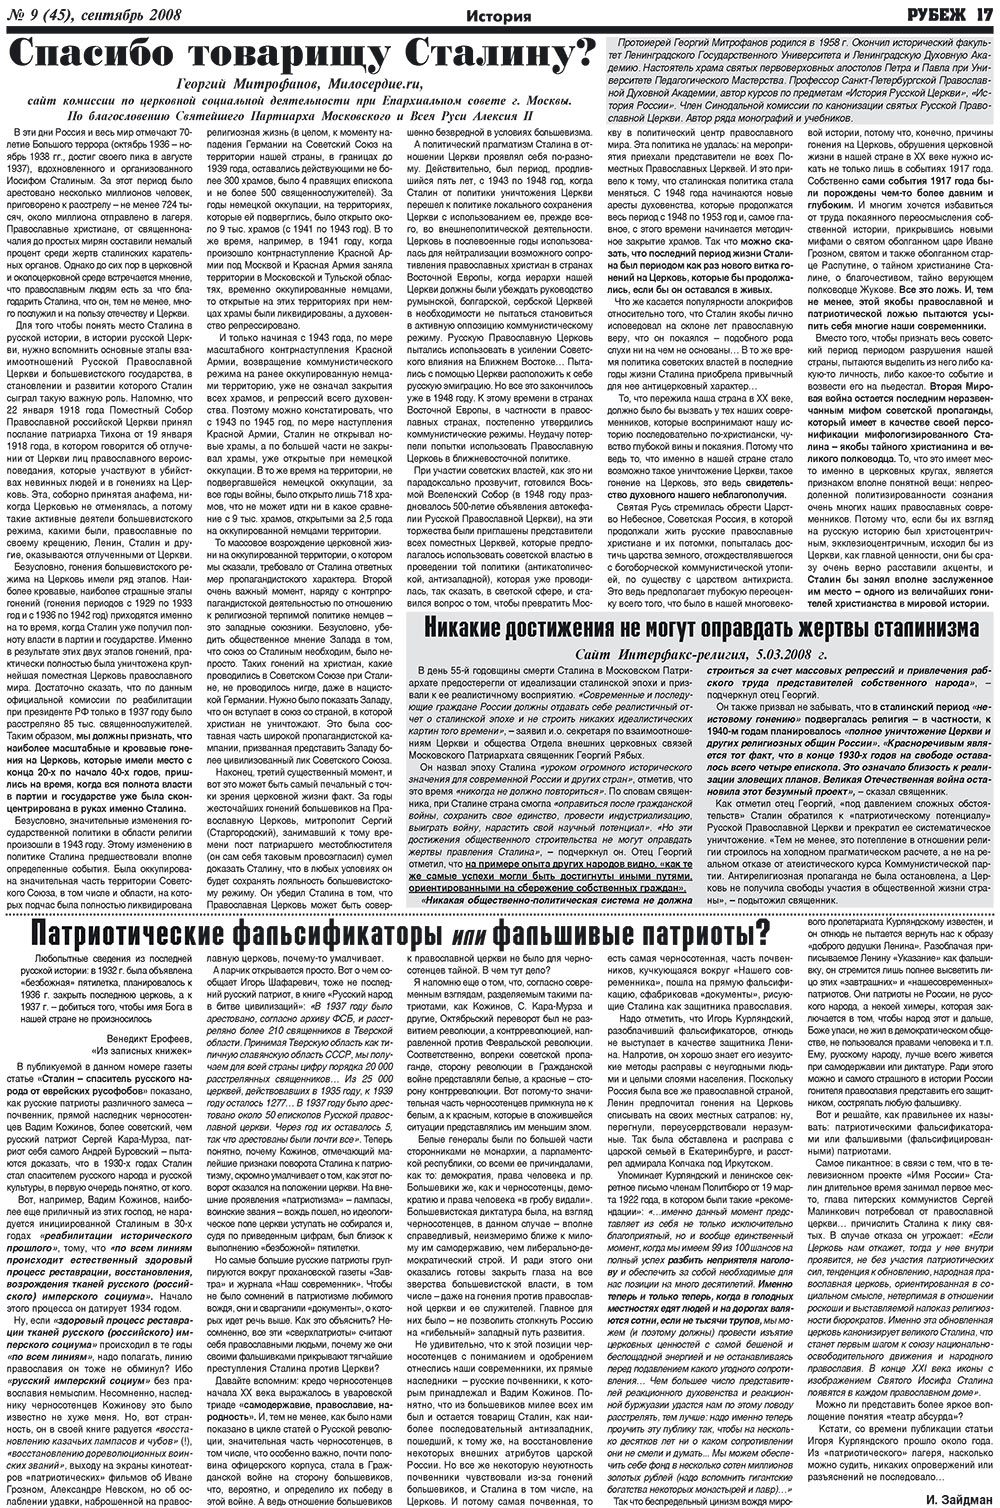 Рубеж, газета. 2008 №9 стр.17